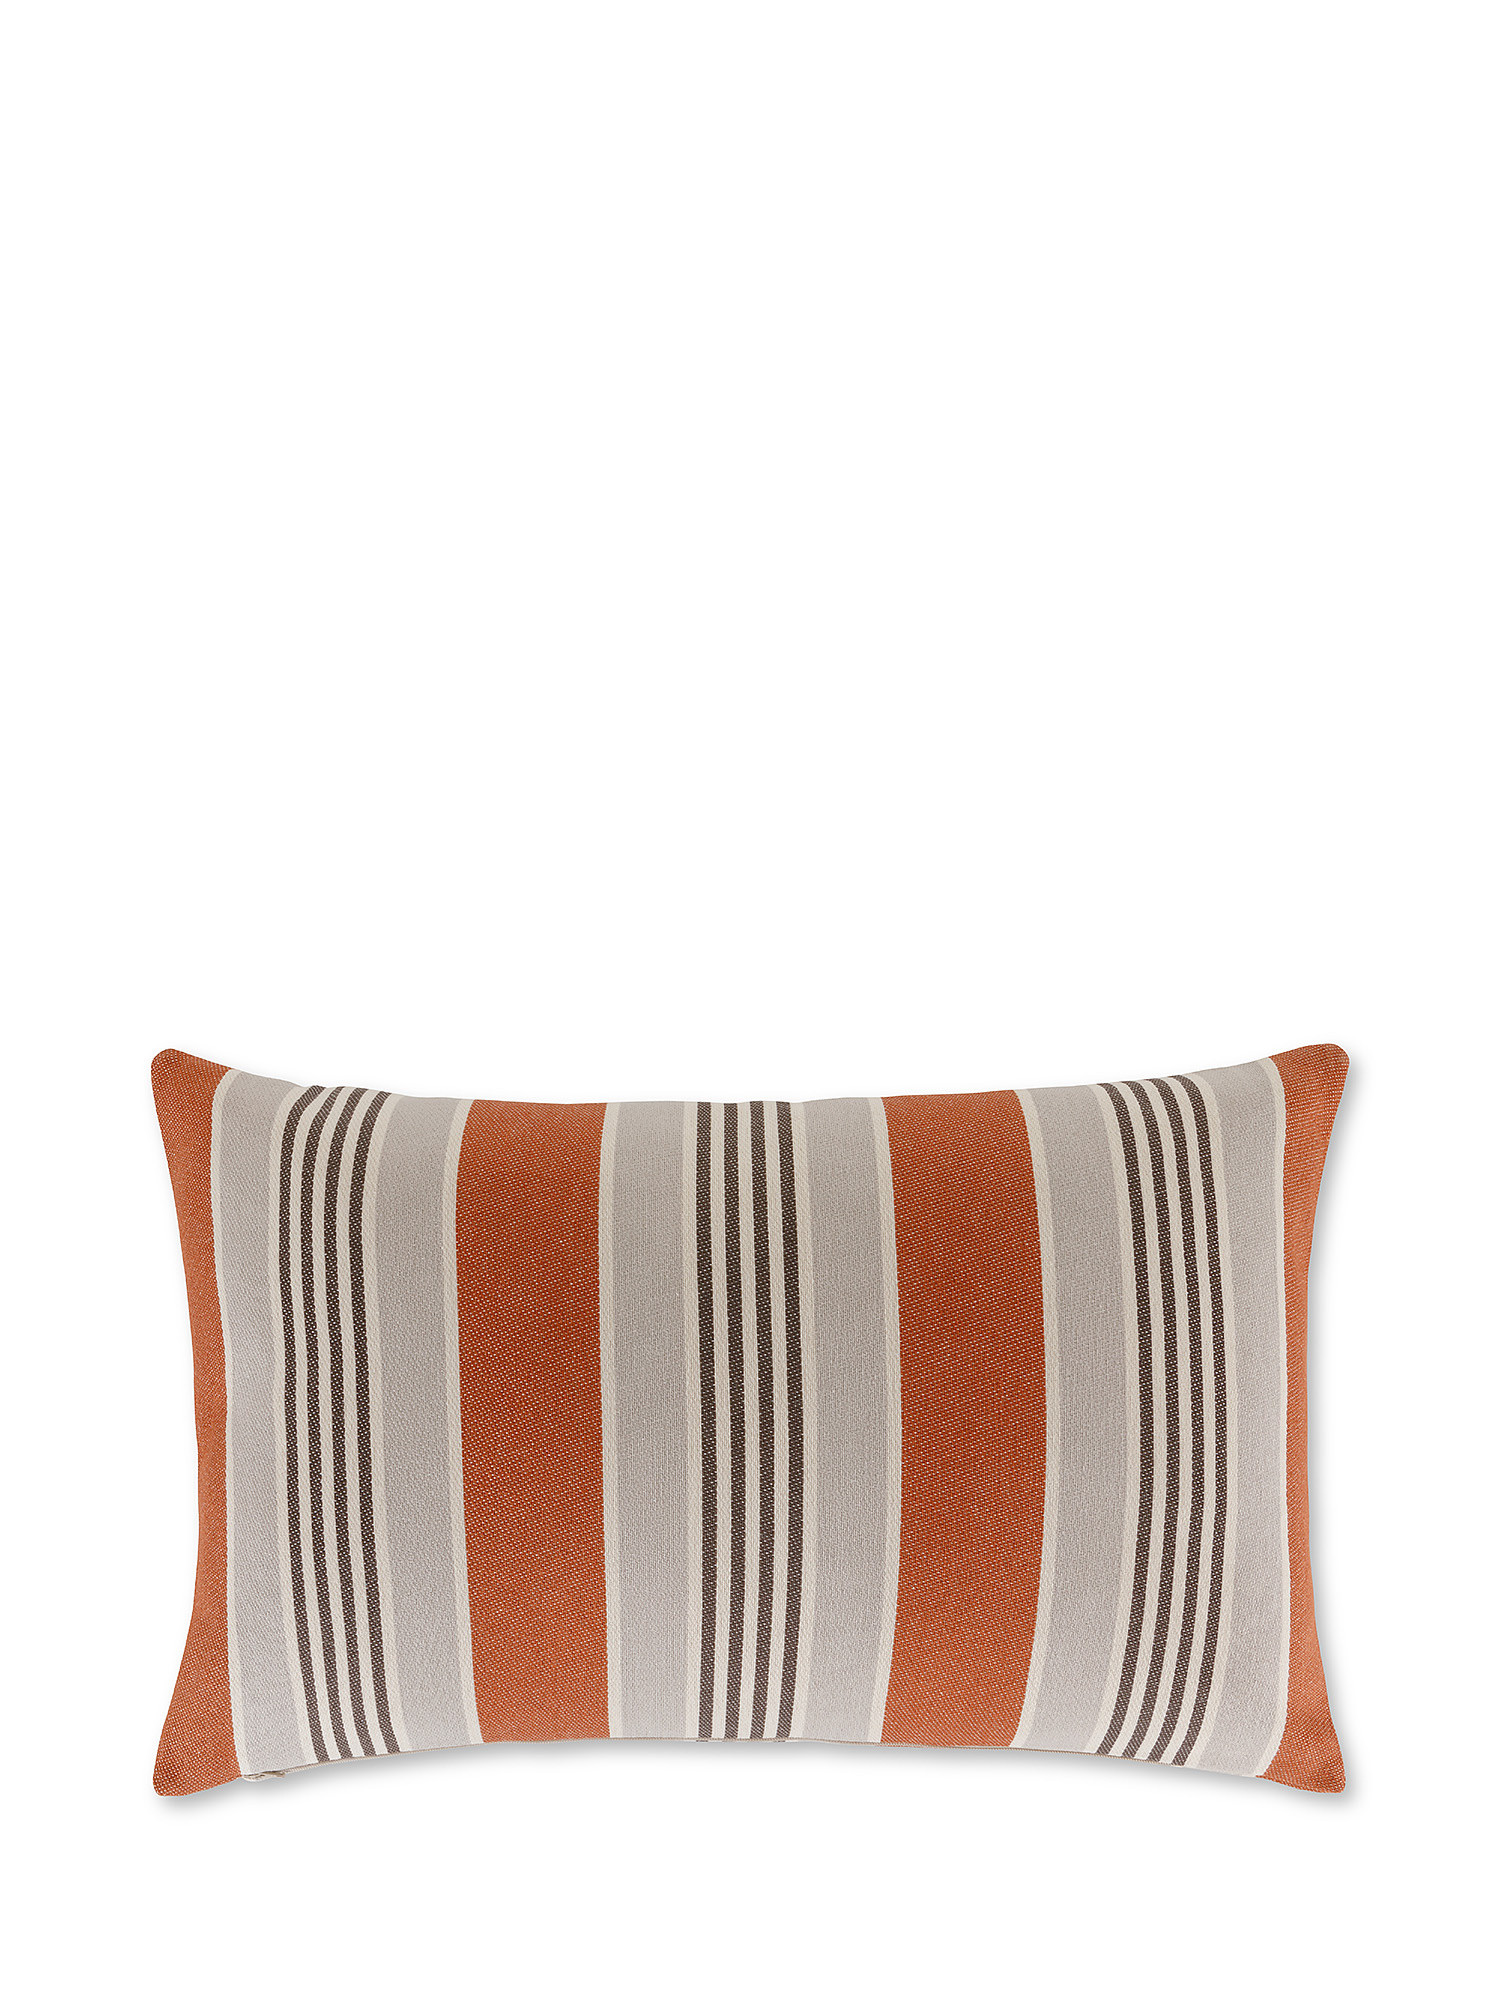 Striped jacquard cushion 35x55cm, Brown, large image number 0